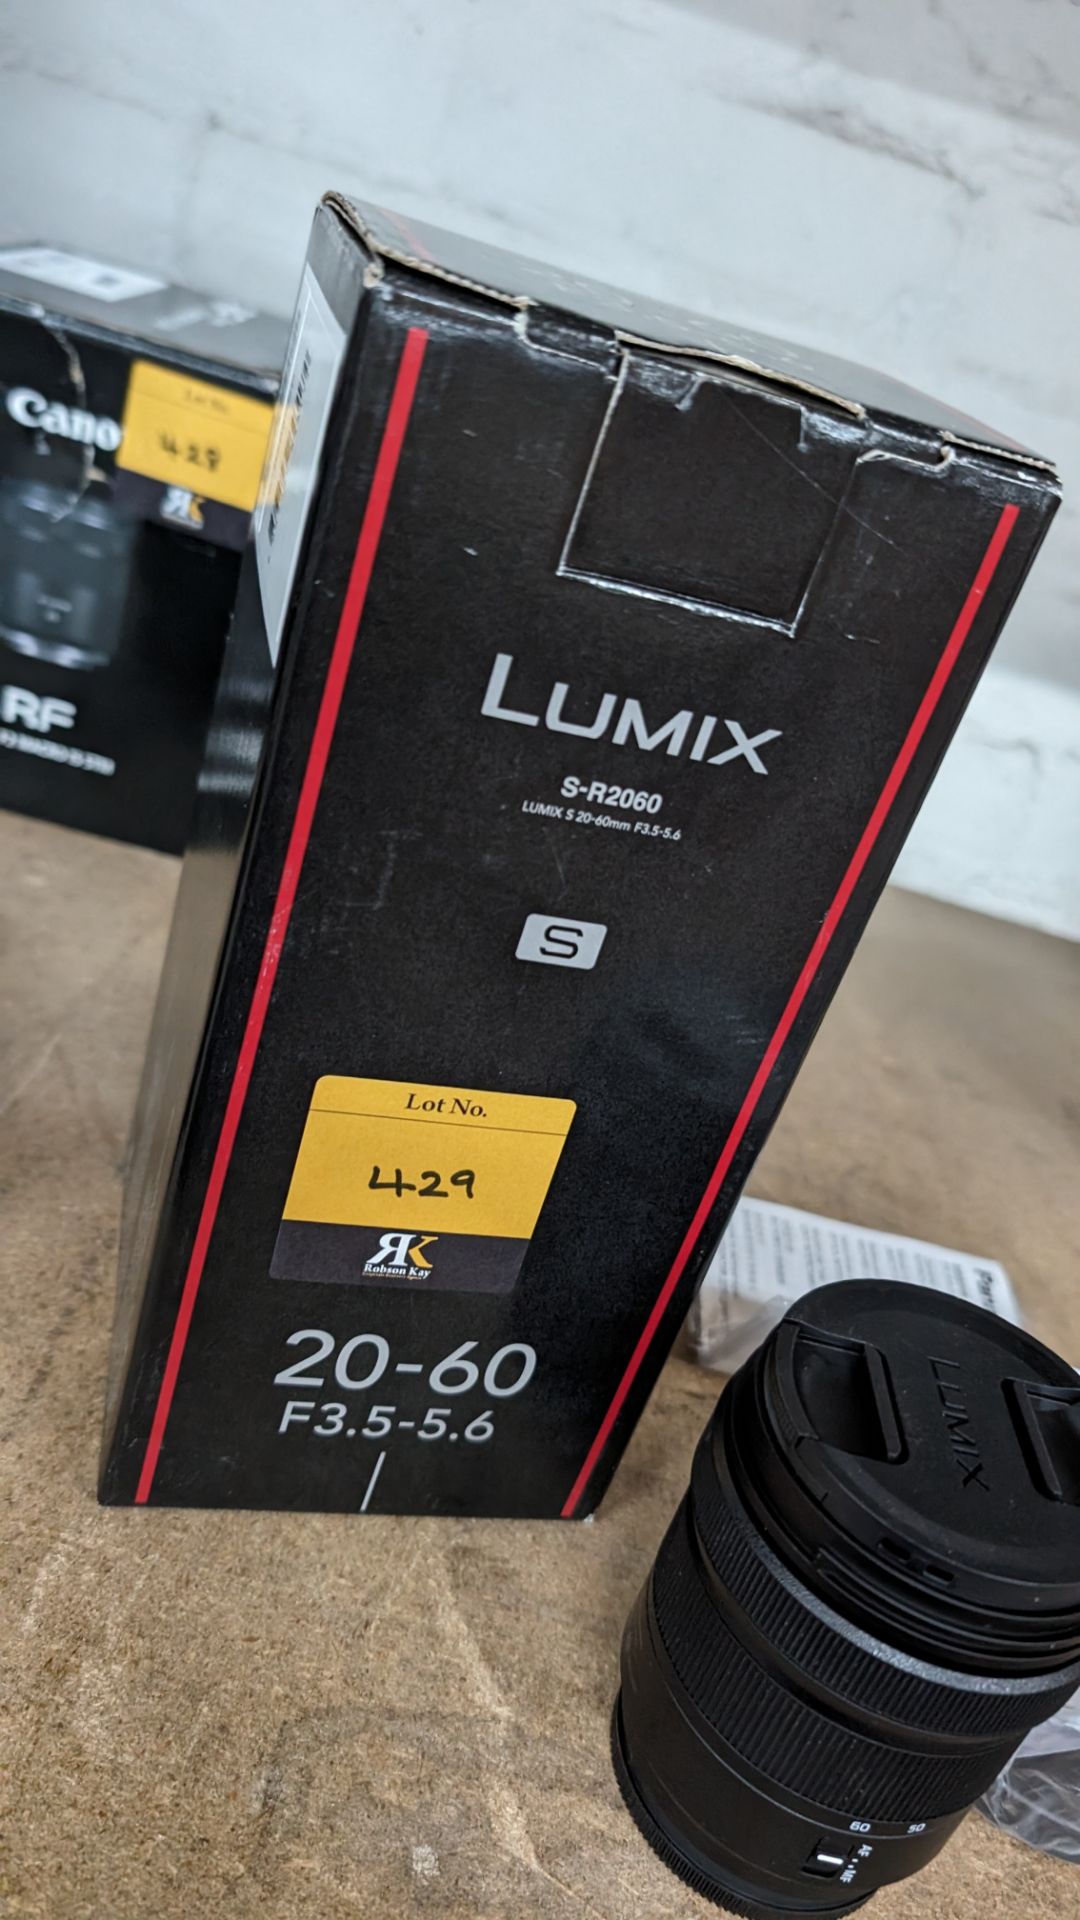 Panasonic Lumix model S-R2060 lens, 20-60mm, f3.5-5.6 - Image 12 of 14